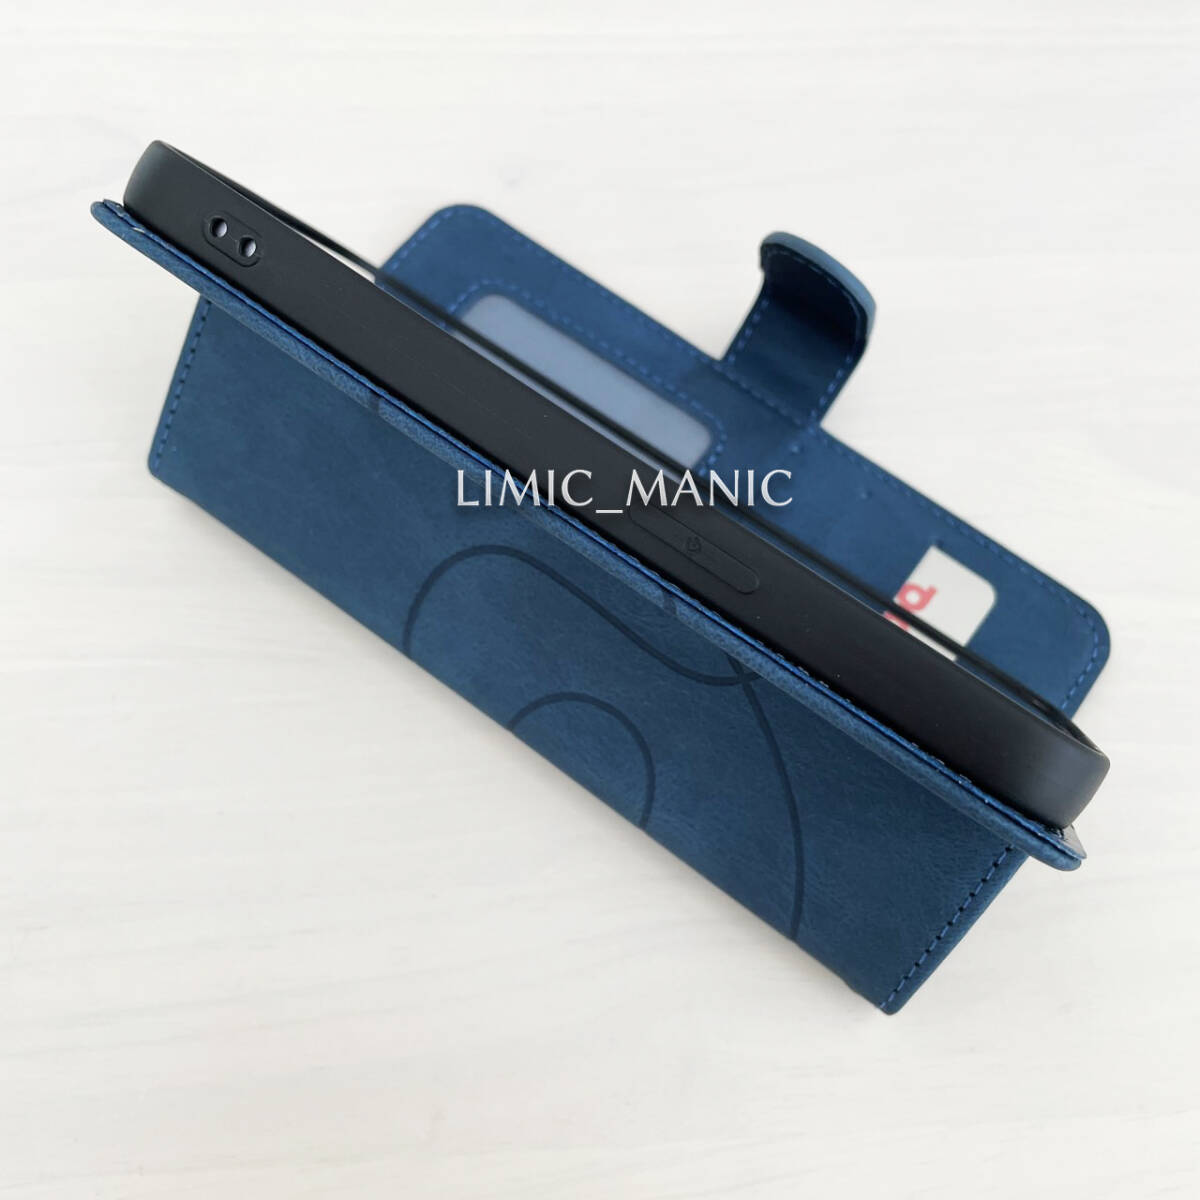 iPhone 13 / 14 ケース スマホ 手帳型 カードケース ツートンカラー 曲線模様 幾何学 ネイビー 紺 紺色 アイフォン